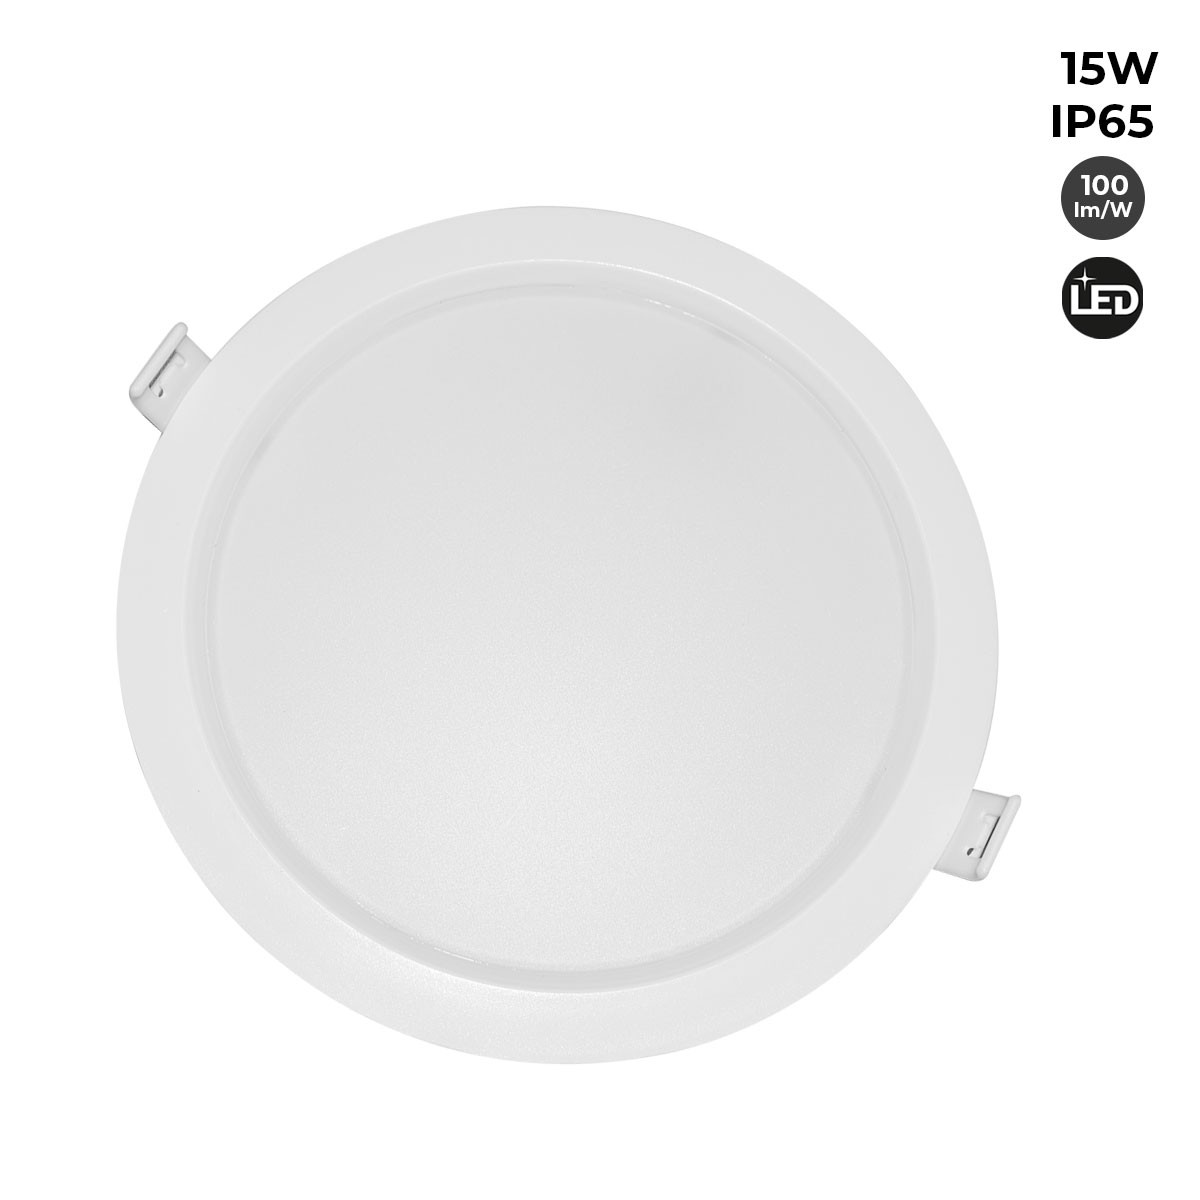 Downlight LED da incasso a tenuta stagna - IP65 - 15W - Taglio Ø 145-160mm